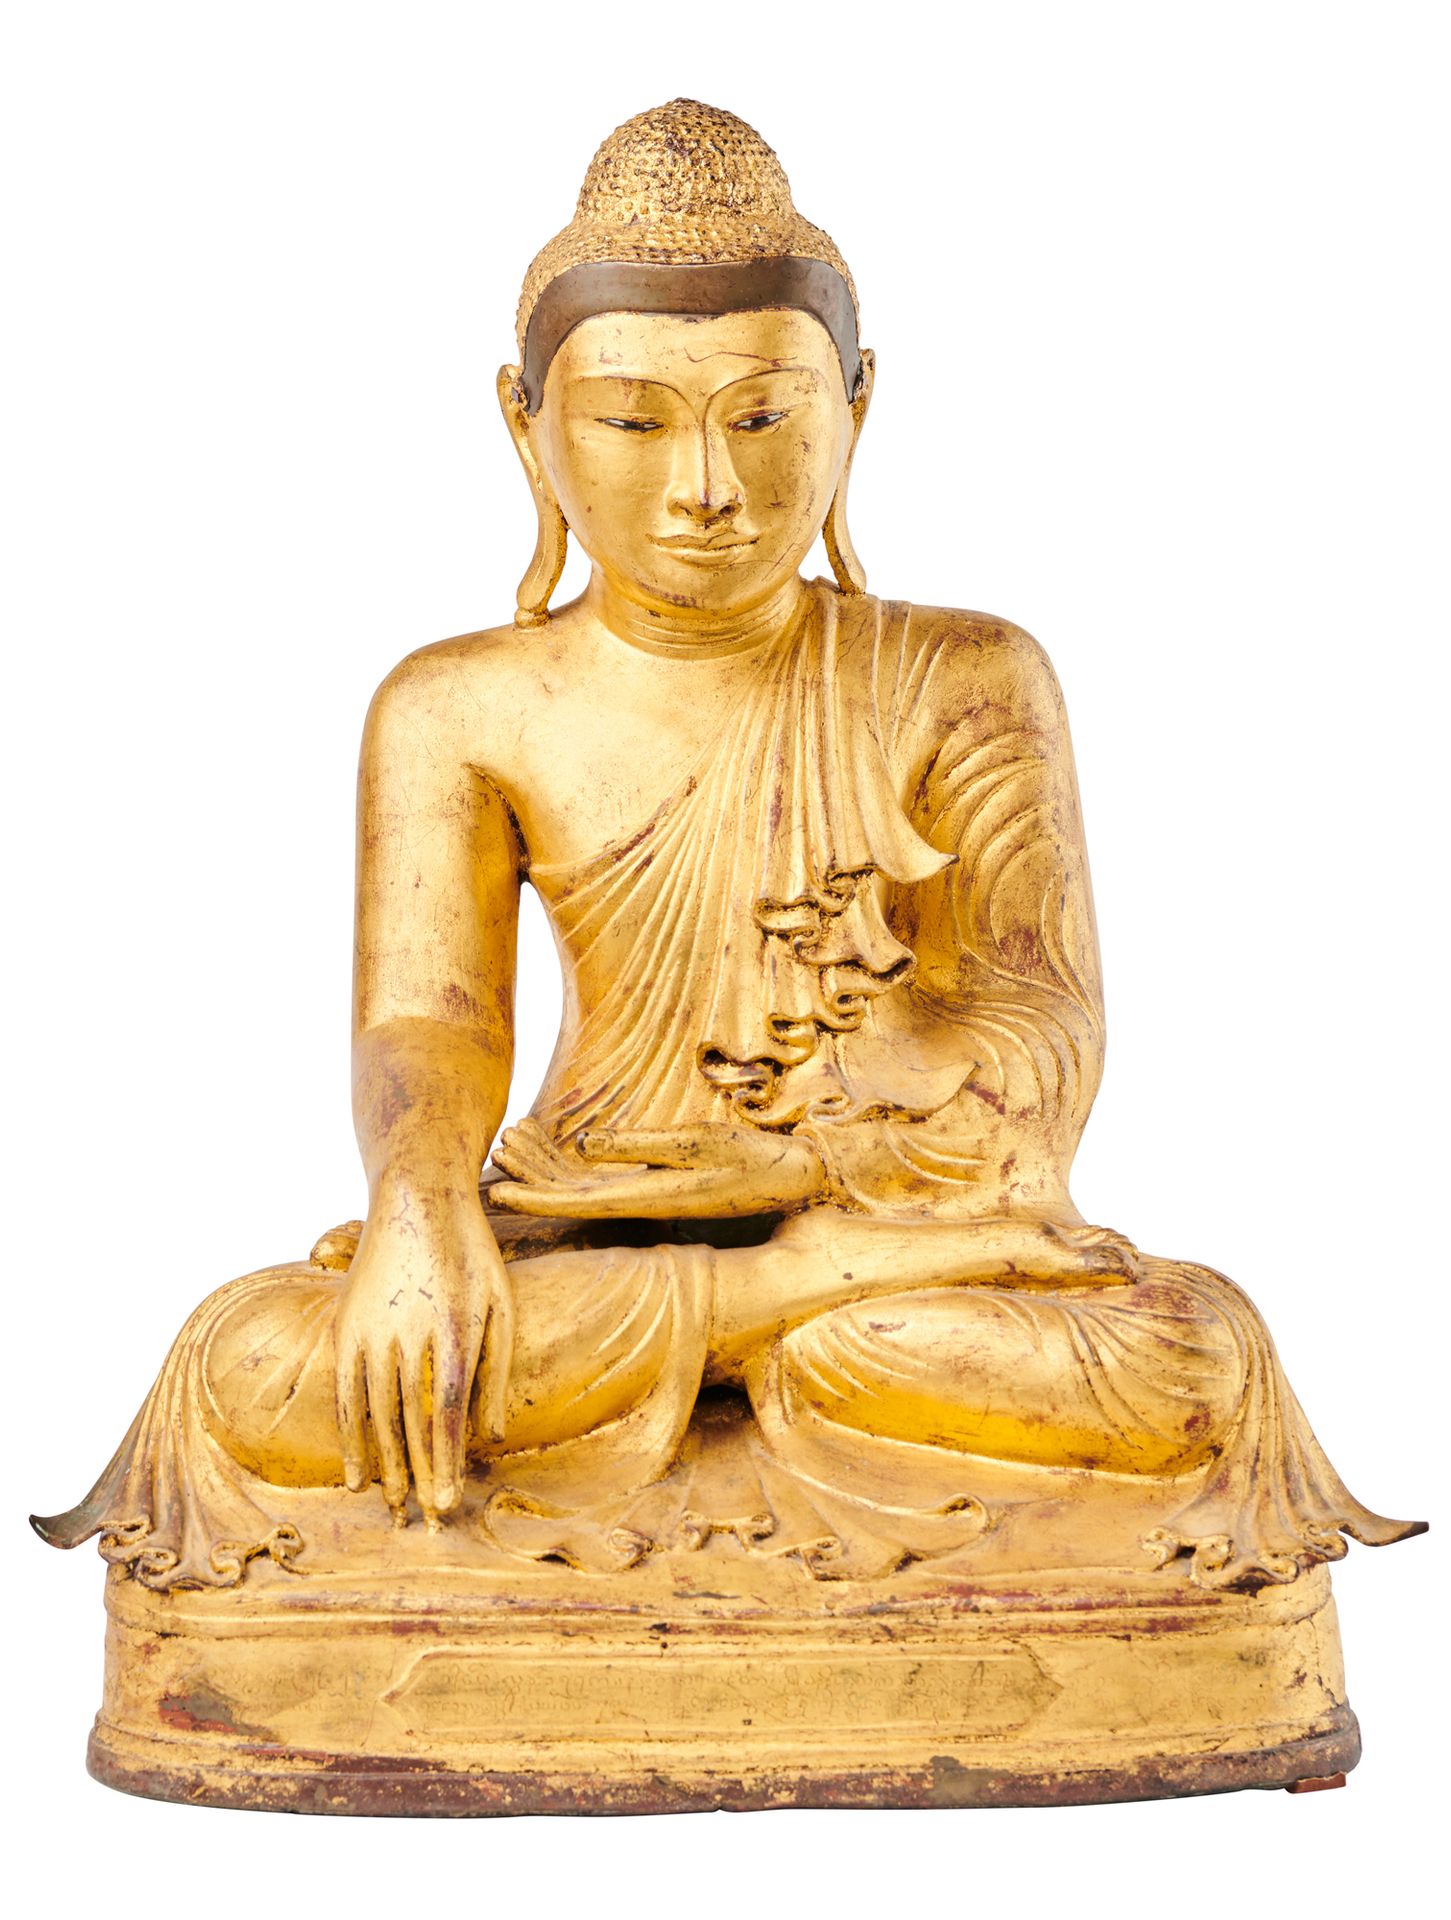 BOUDDHA 马拉维贾亚身着僧袍，端坐在梵天座上，双手呈托起大地的姿势，作为见证人


镀金失蜡青铜雕塑
缅甸曼德勒王国 19 世纪
高度：58 厘米